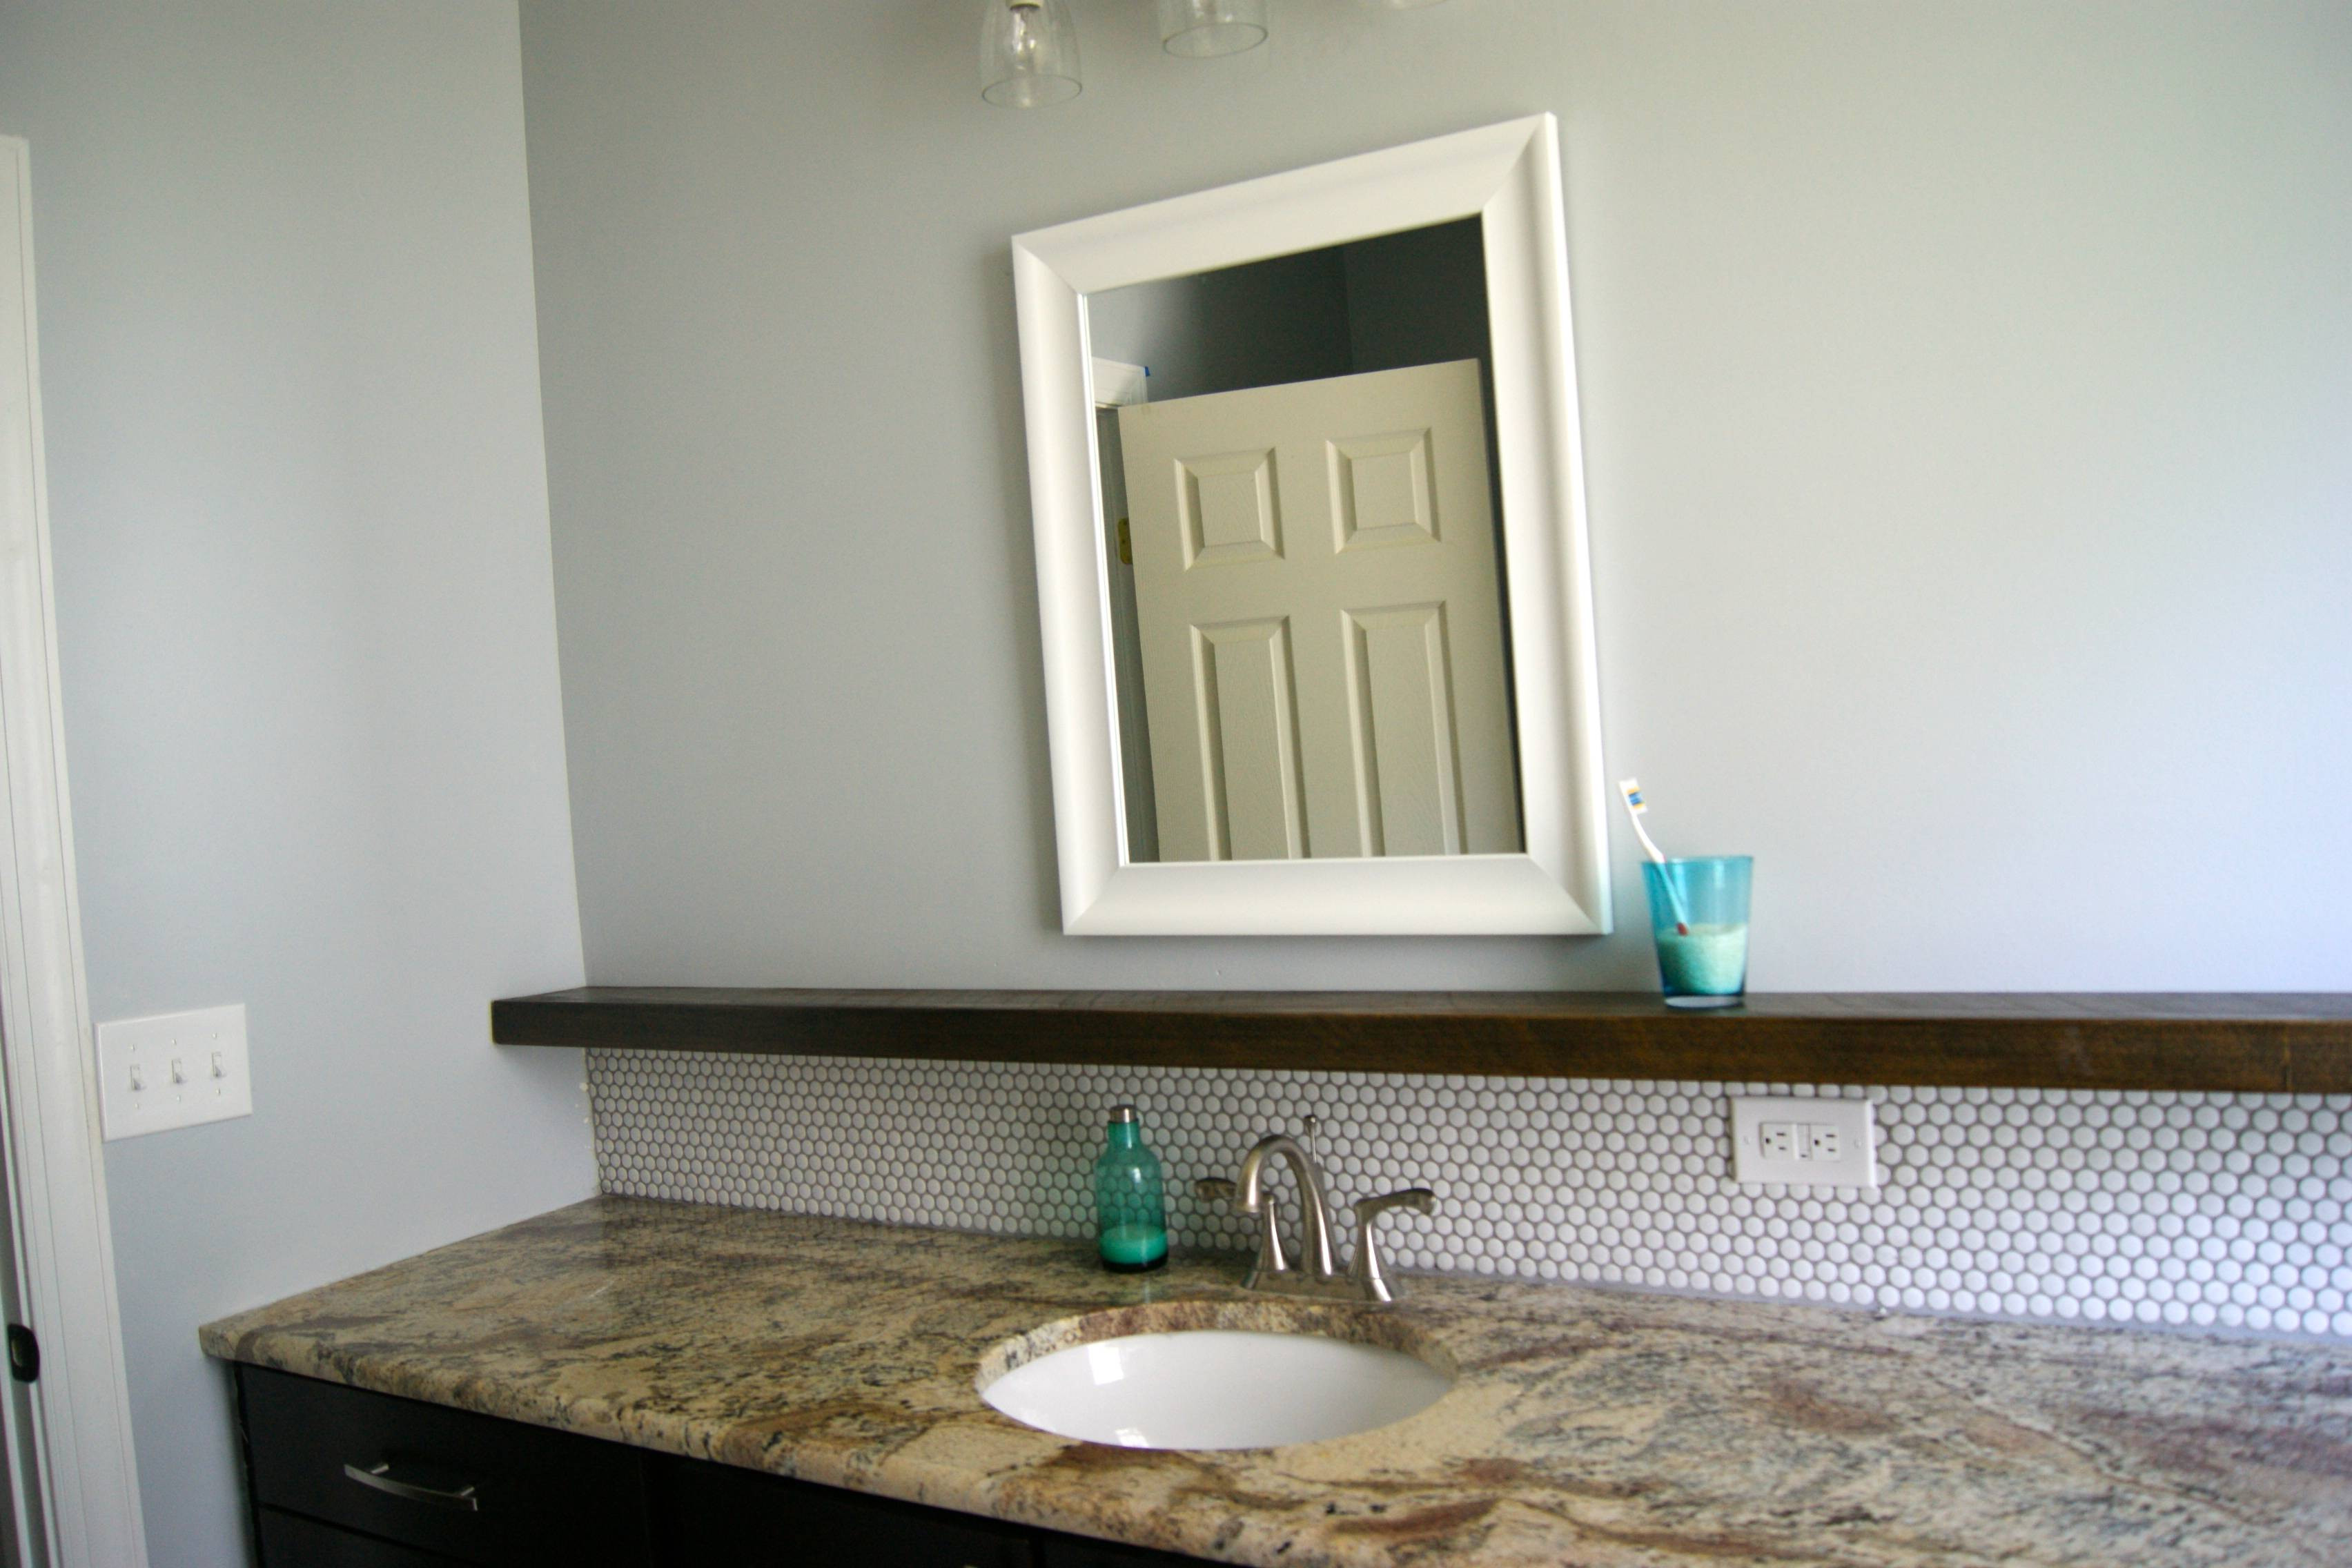 Best ideas about DIY Bathroom Backsplash
. Save or Pin Remodelaholic Now.